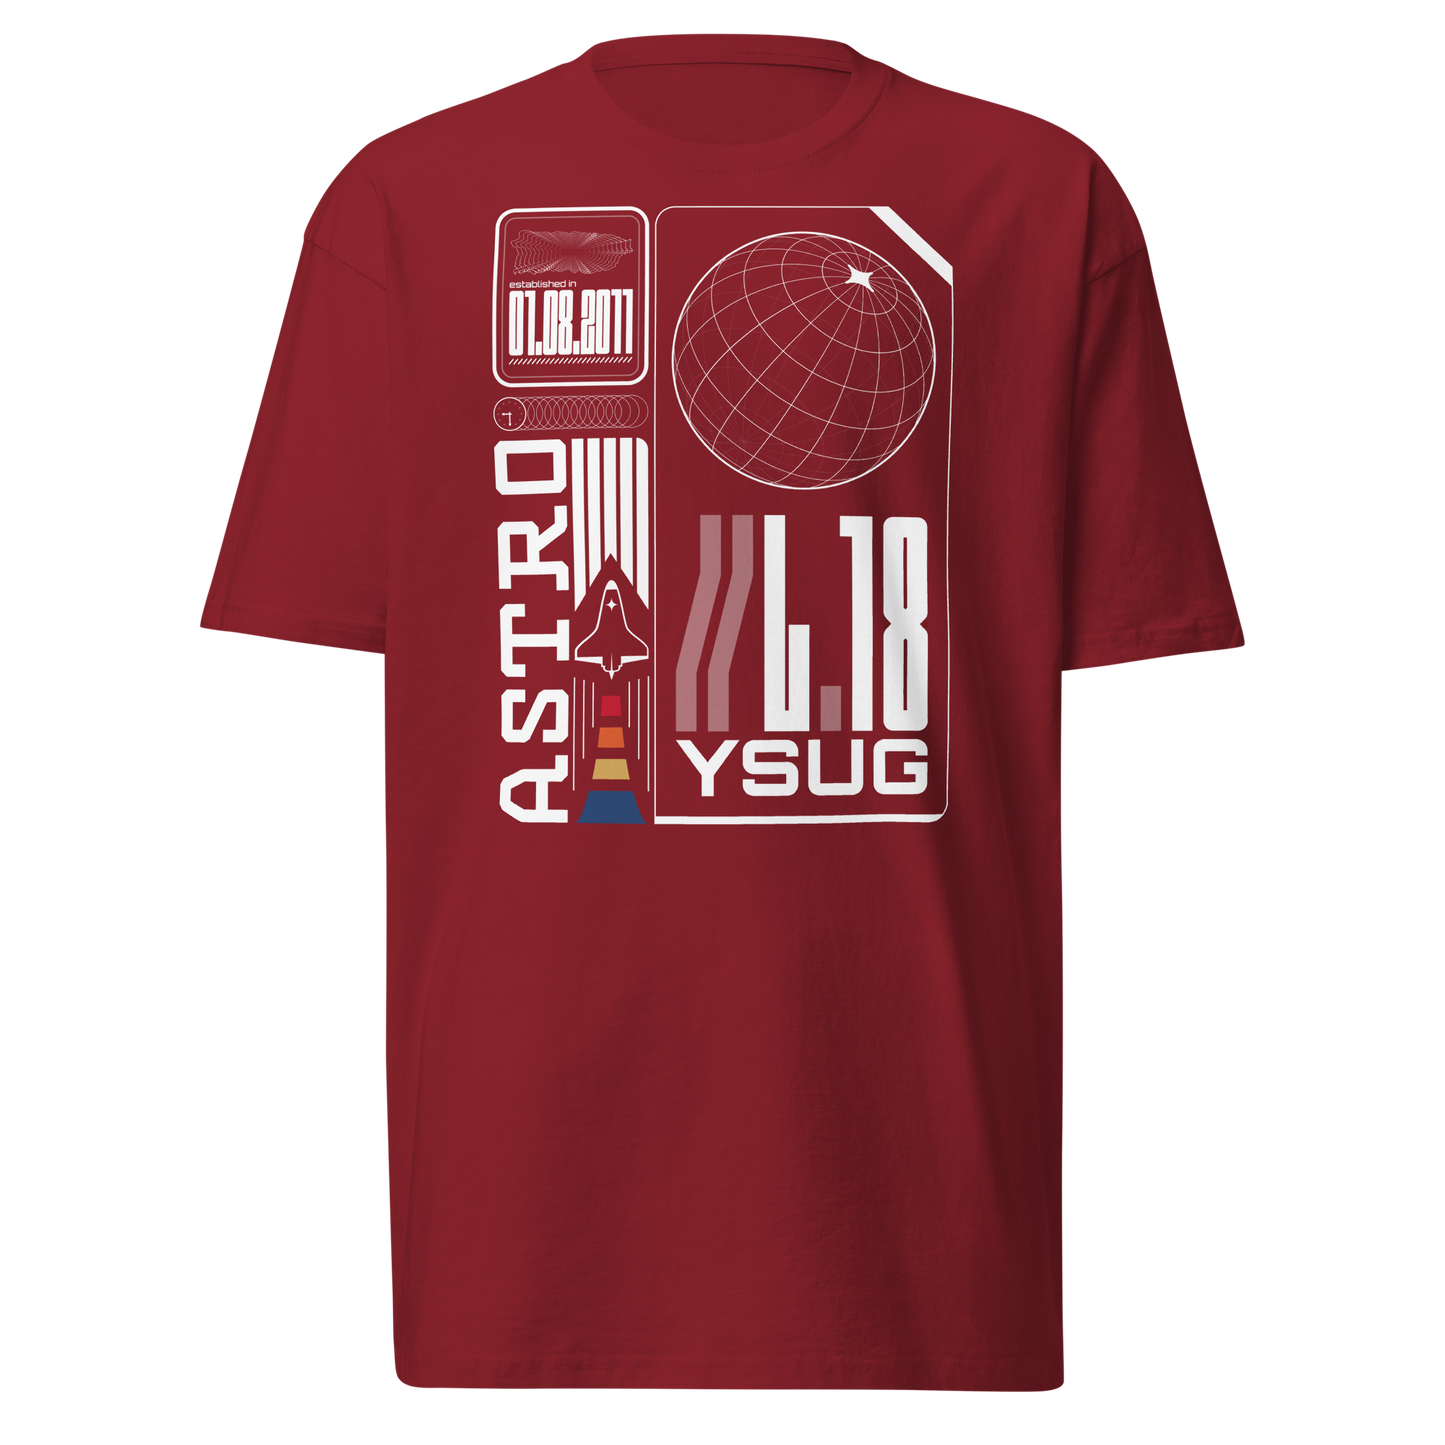 YSUG Astro - Lightside Shirt